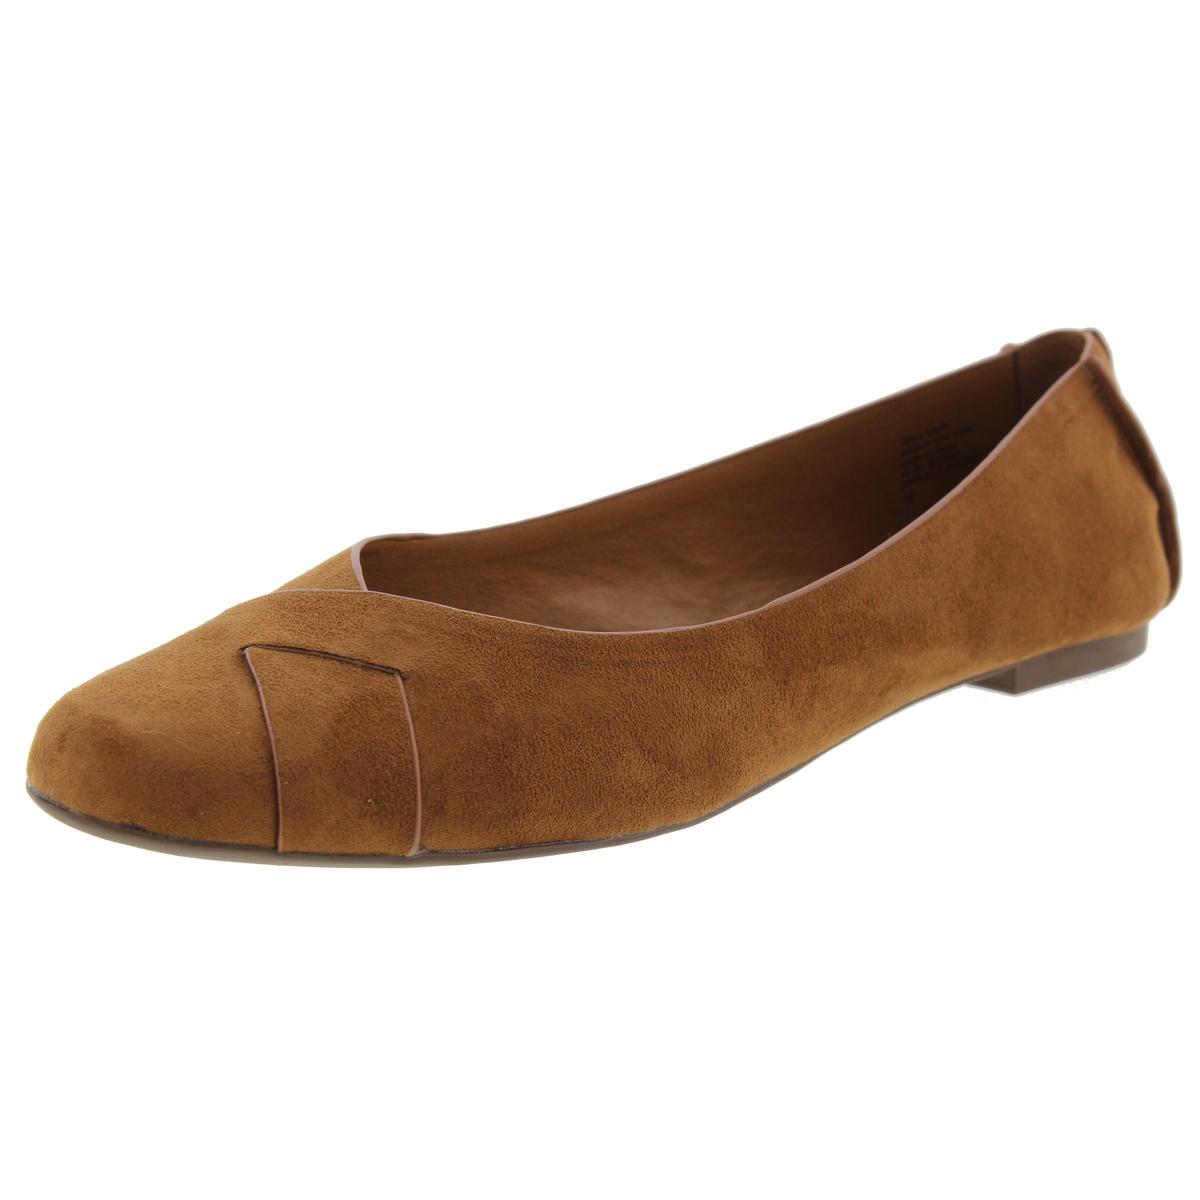 BC Footwear 1369 Womens Petite Brown Round Toe Flats Shoes 8.5 Medium ...